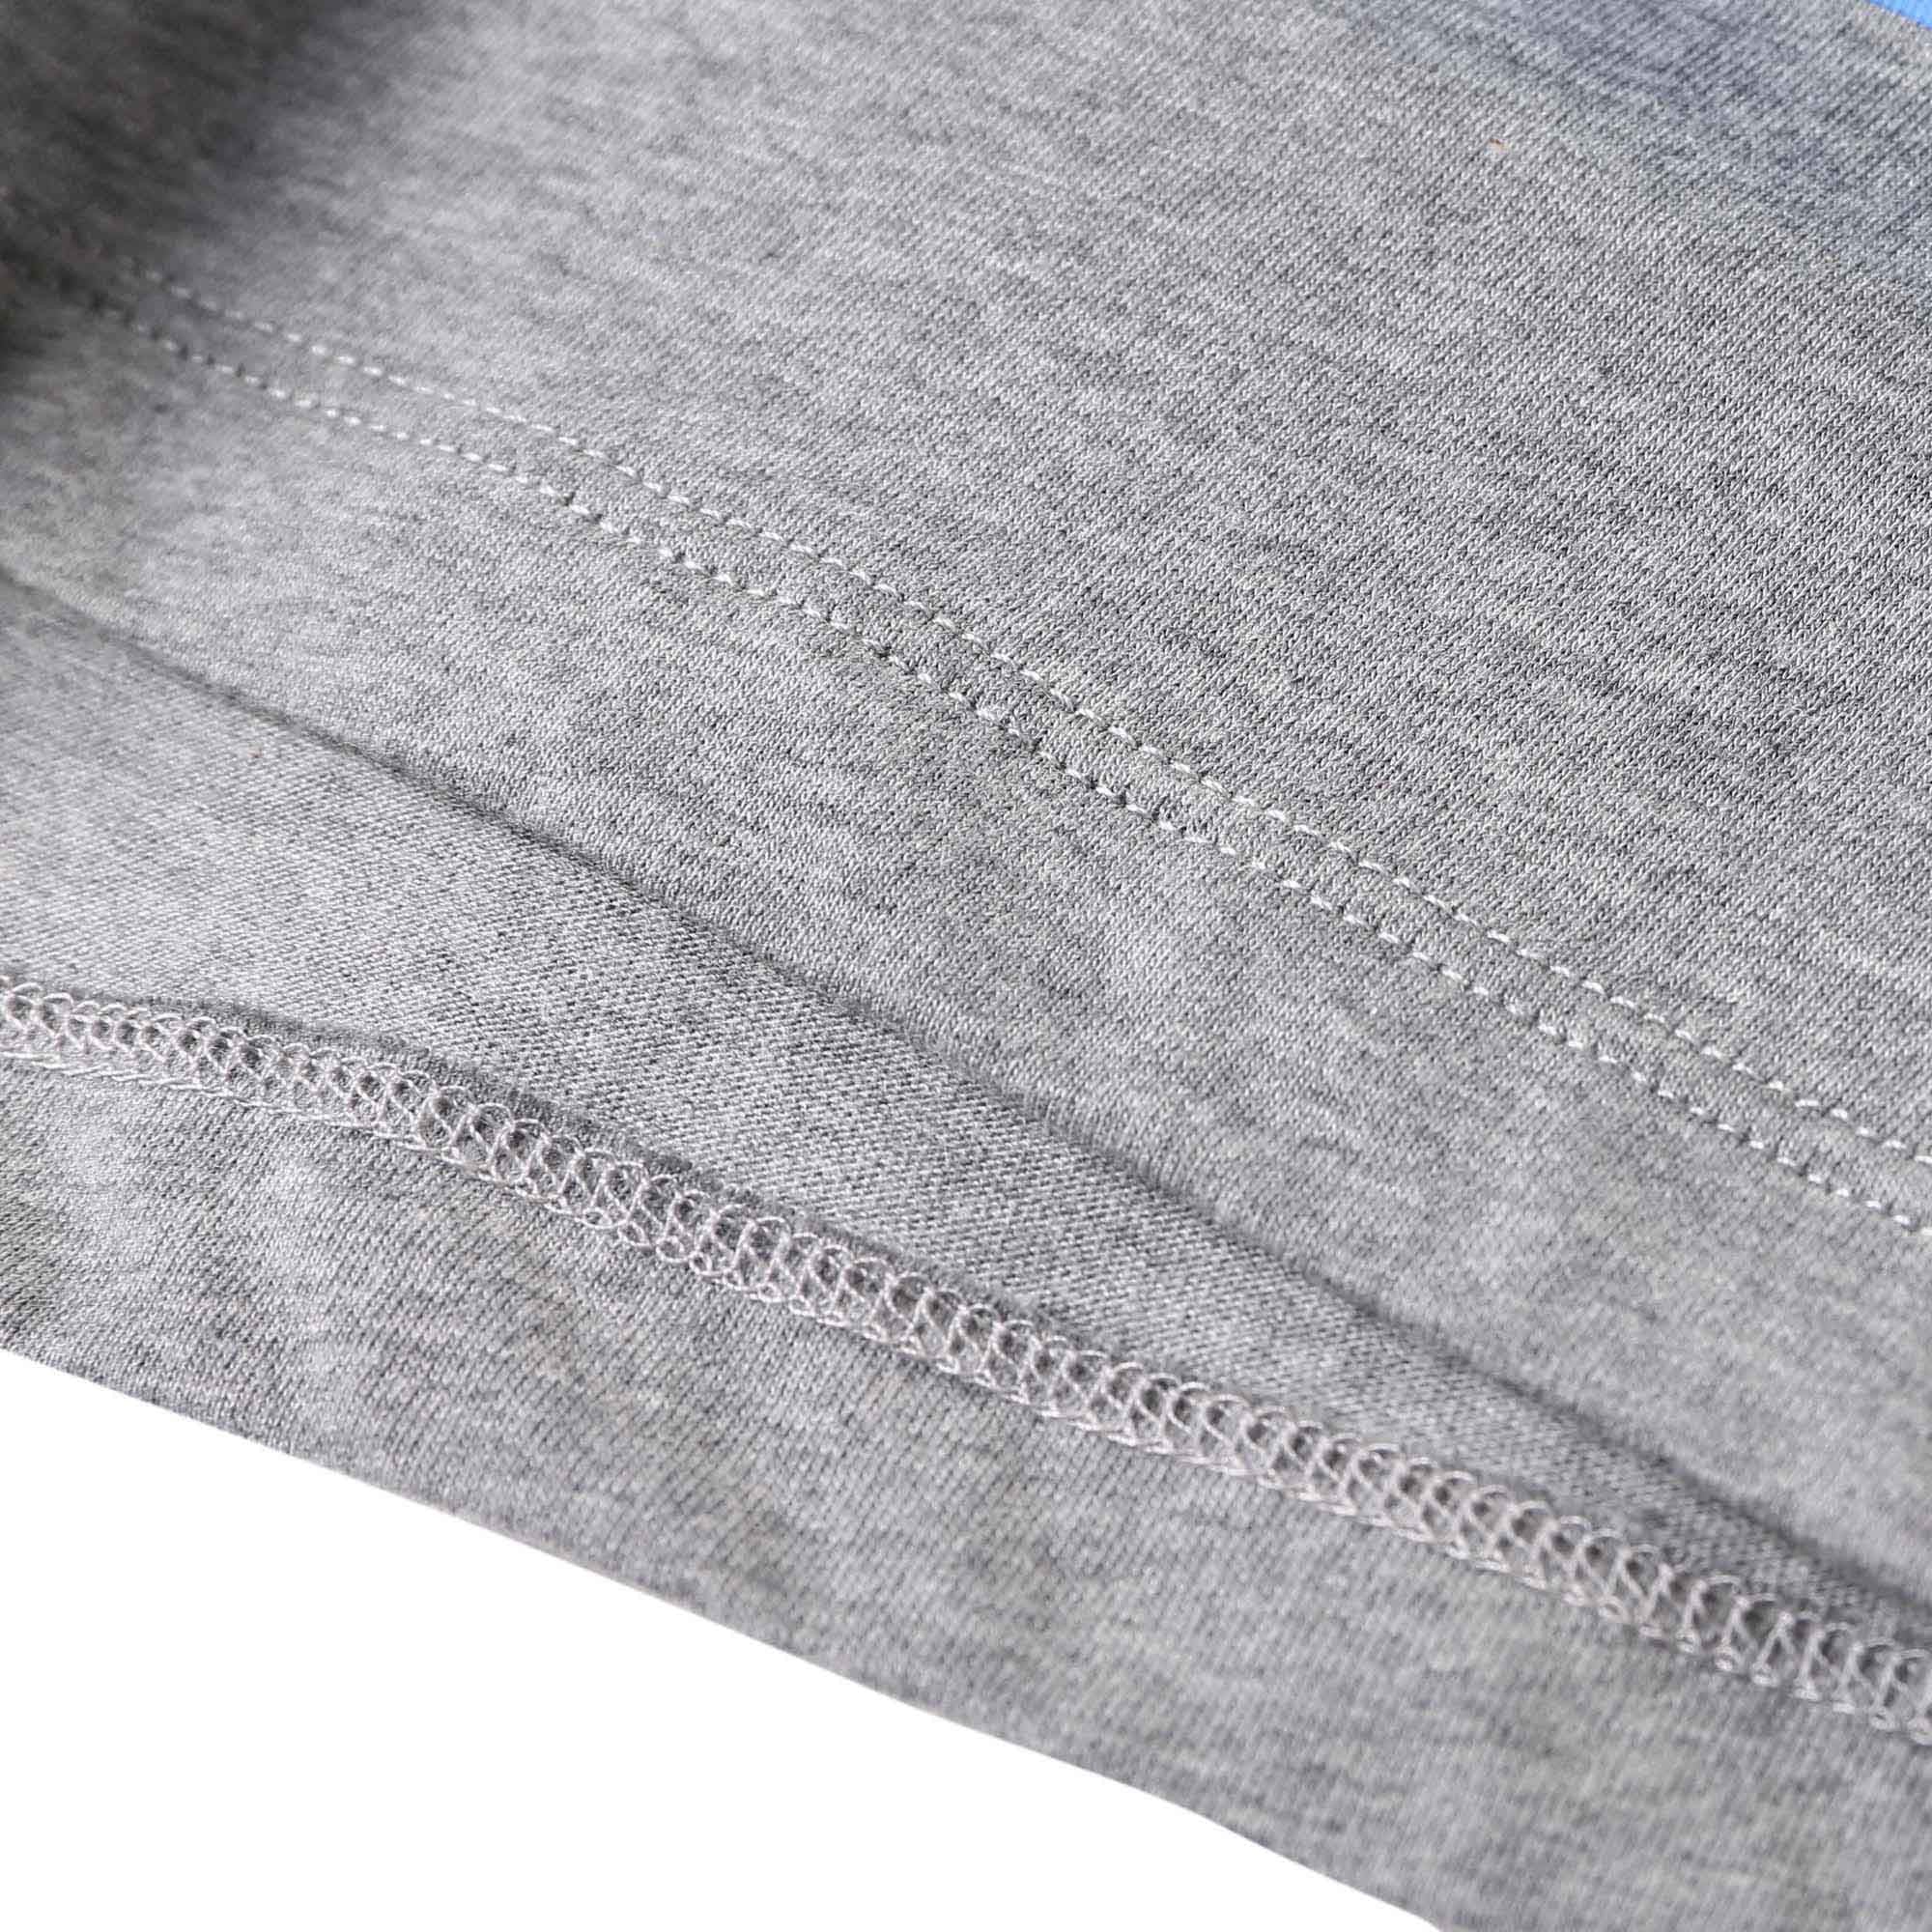 Boys Dark Grey 'FF' Monster Printed Cotton T-Shirt - CÉMAROSE | Children's Fashion Store - 5